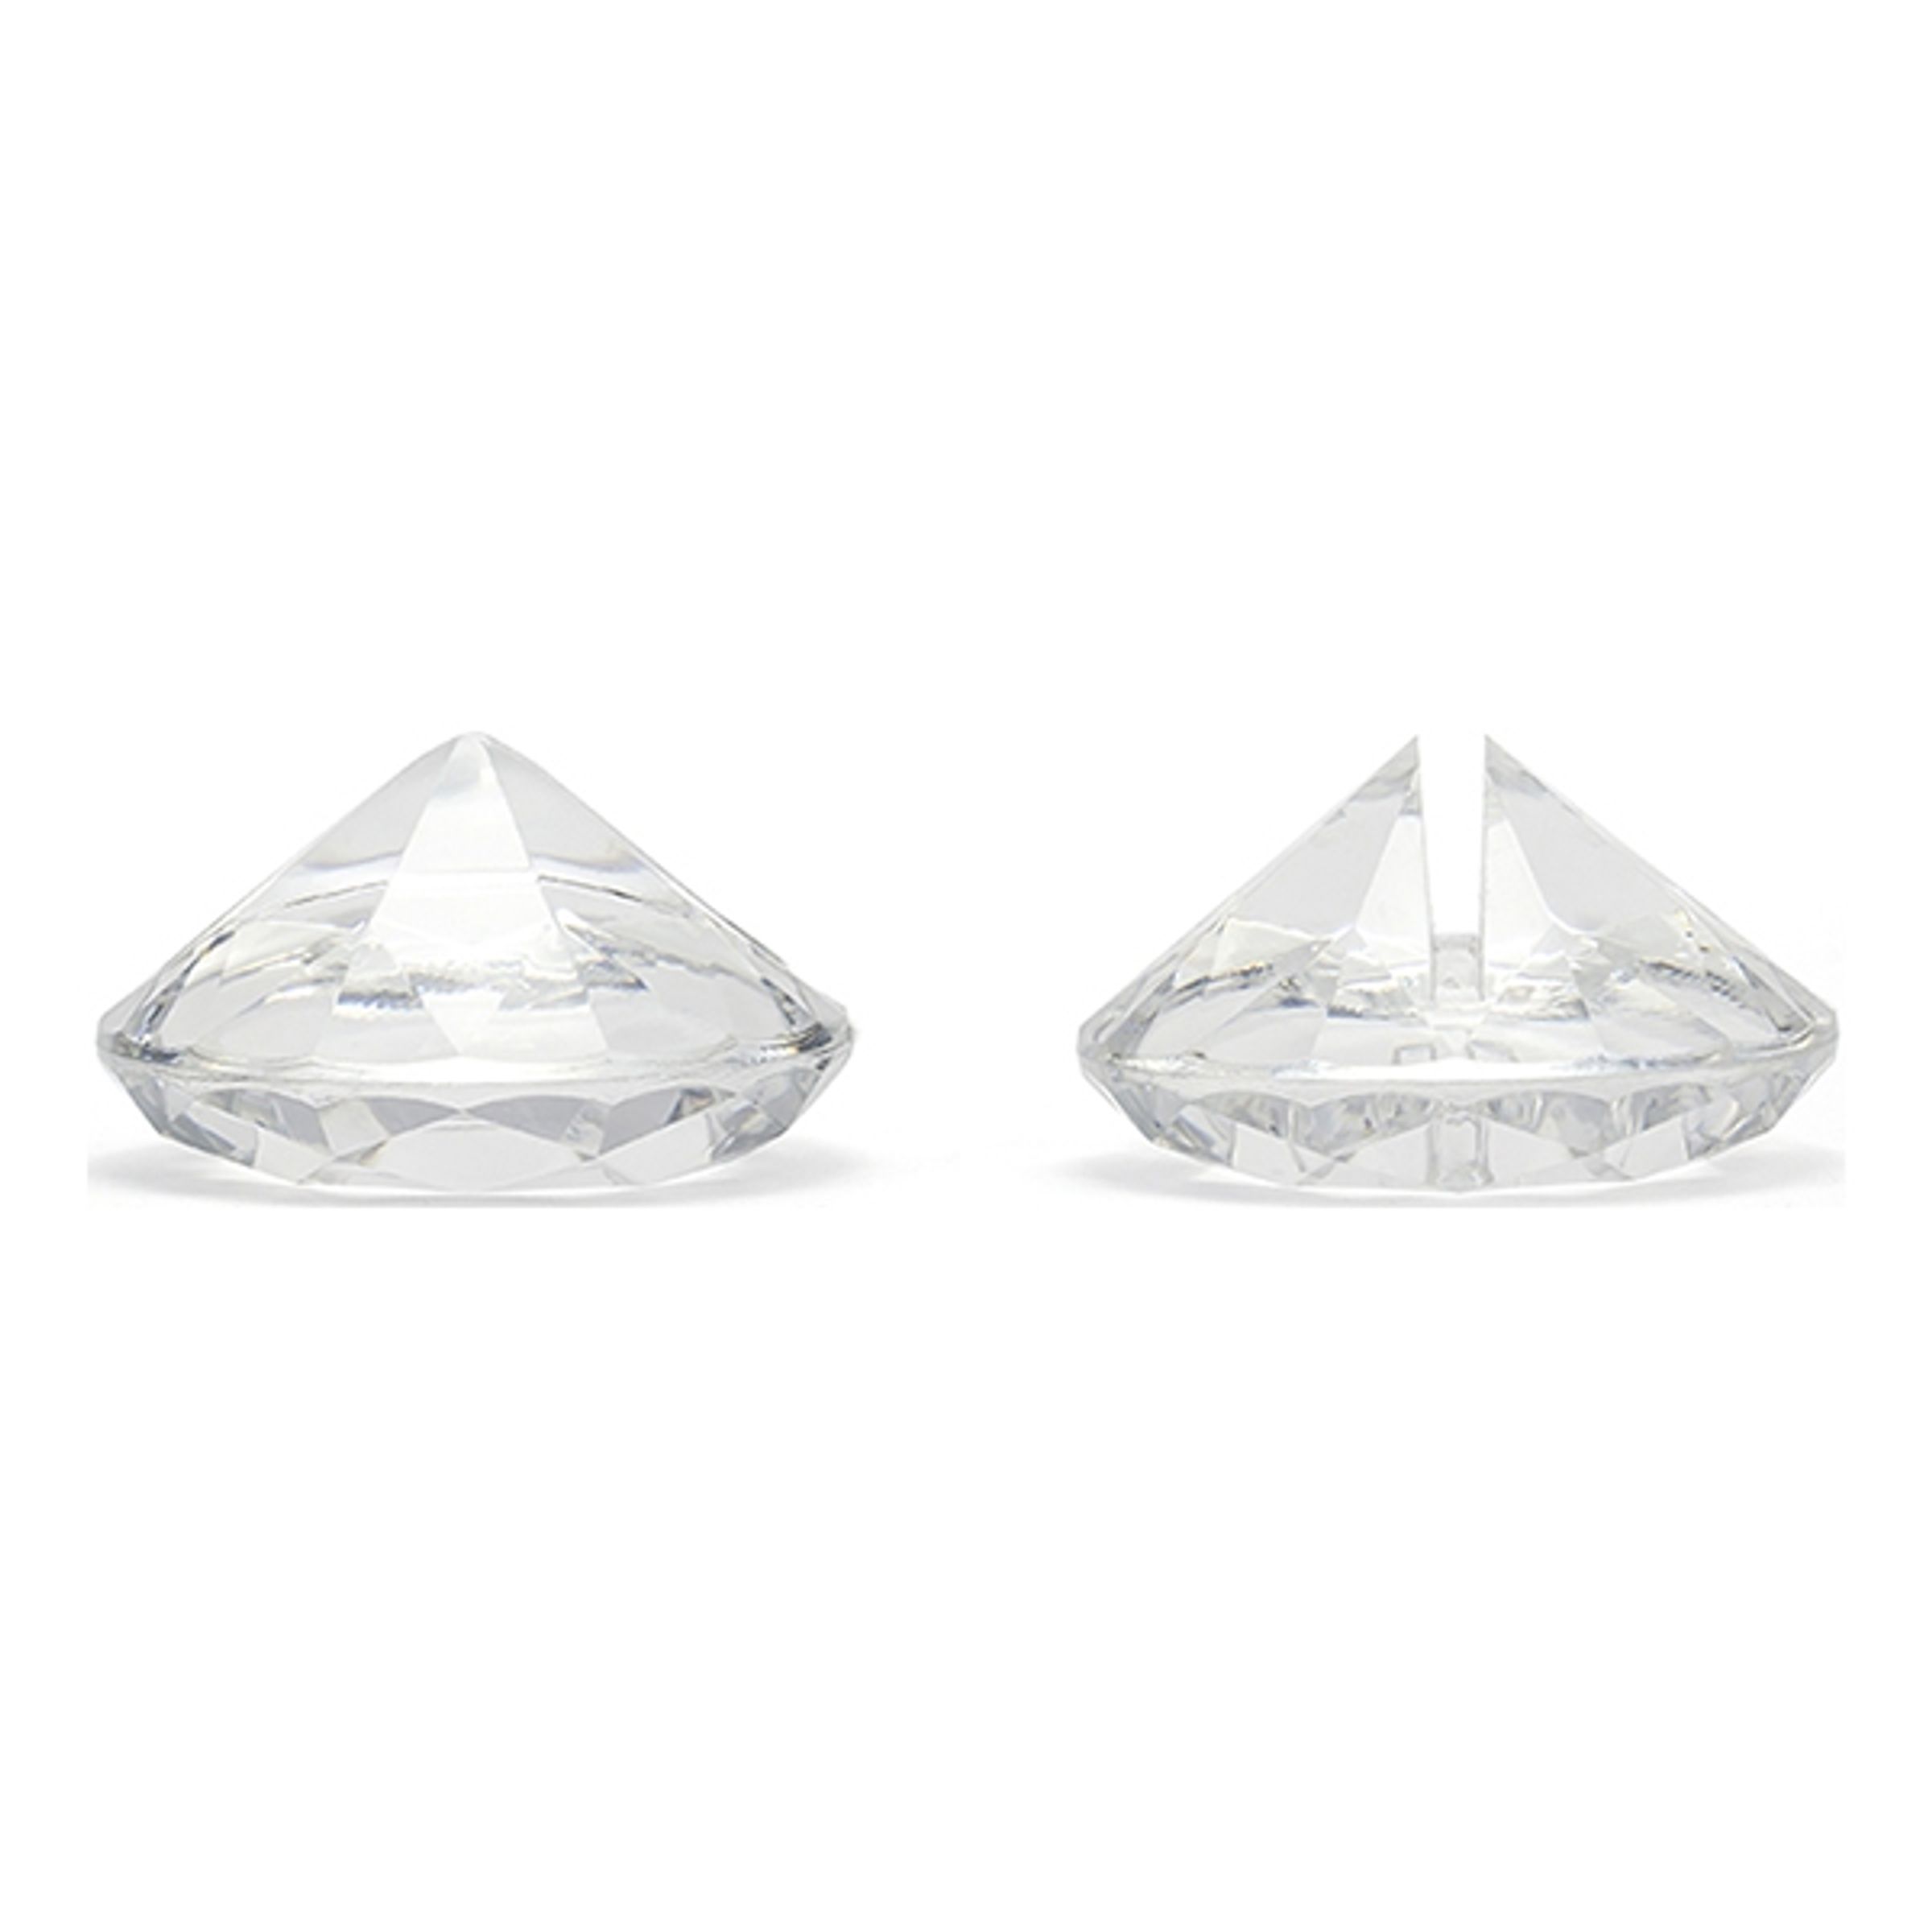 Placeringskortshållare Diamant 10-pack - Klara